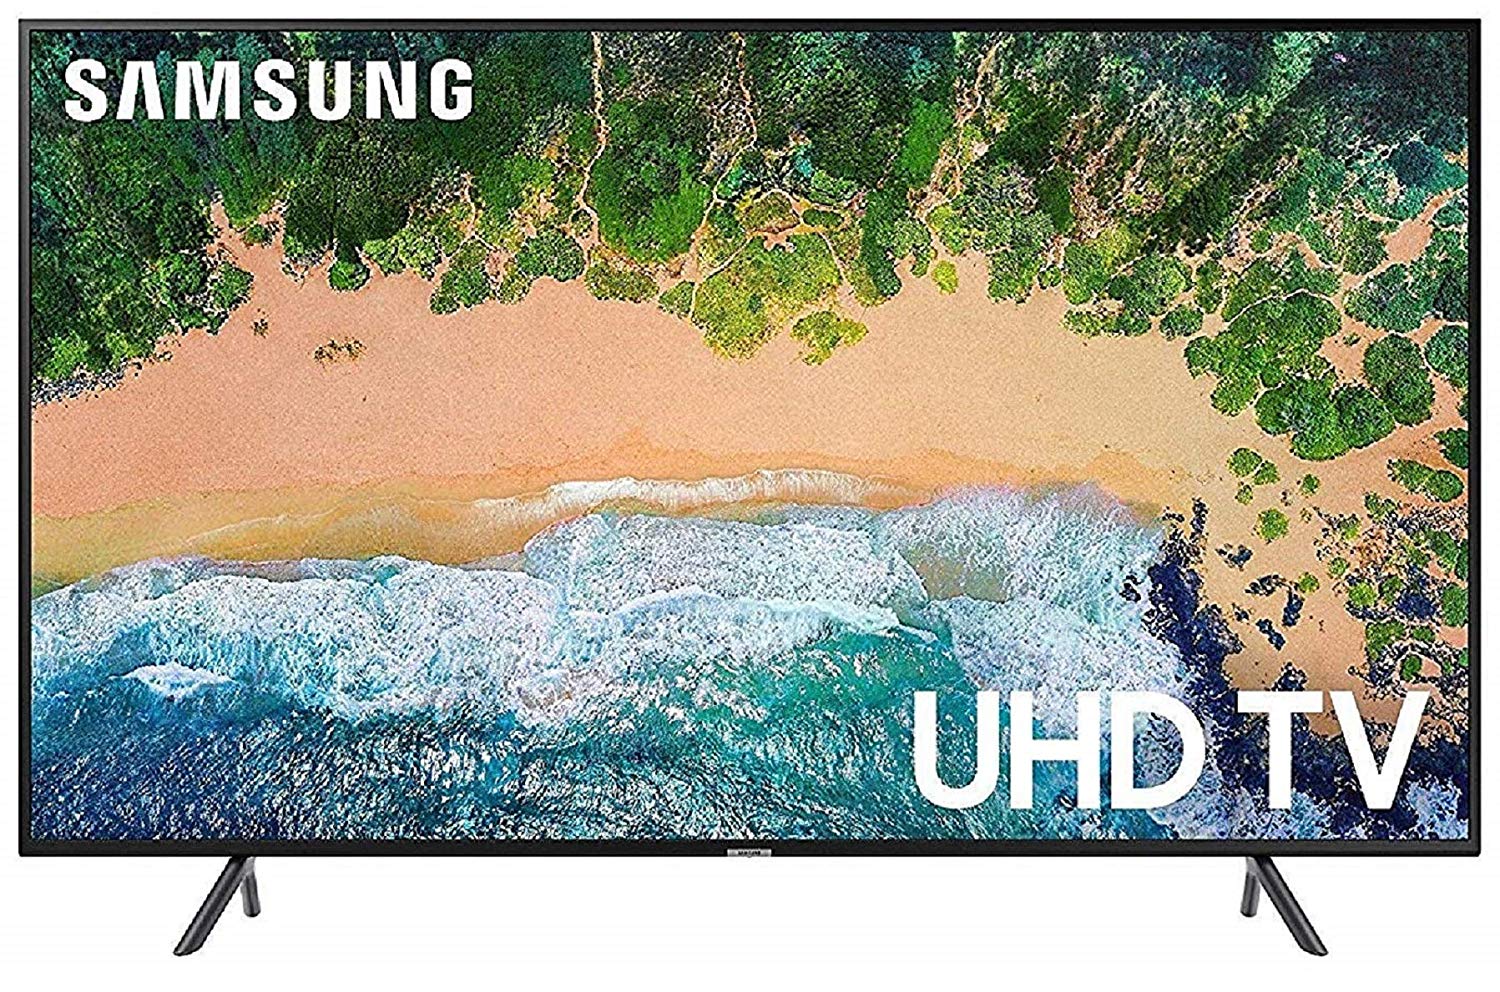 Samsung 108 cm (43 inches) 7 Series 43NU7100 4K LED Smart TV